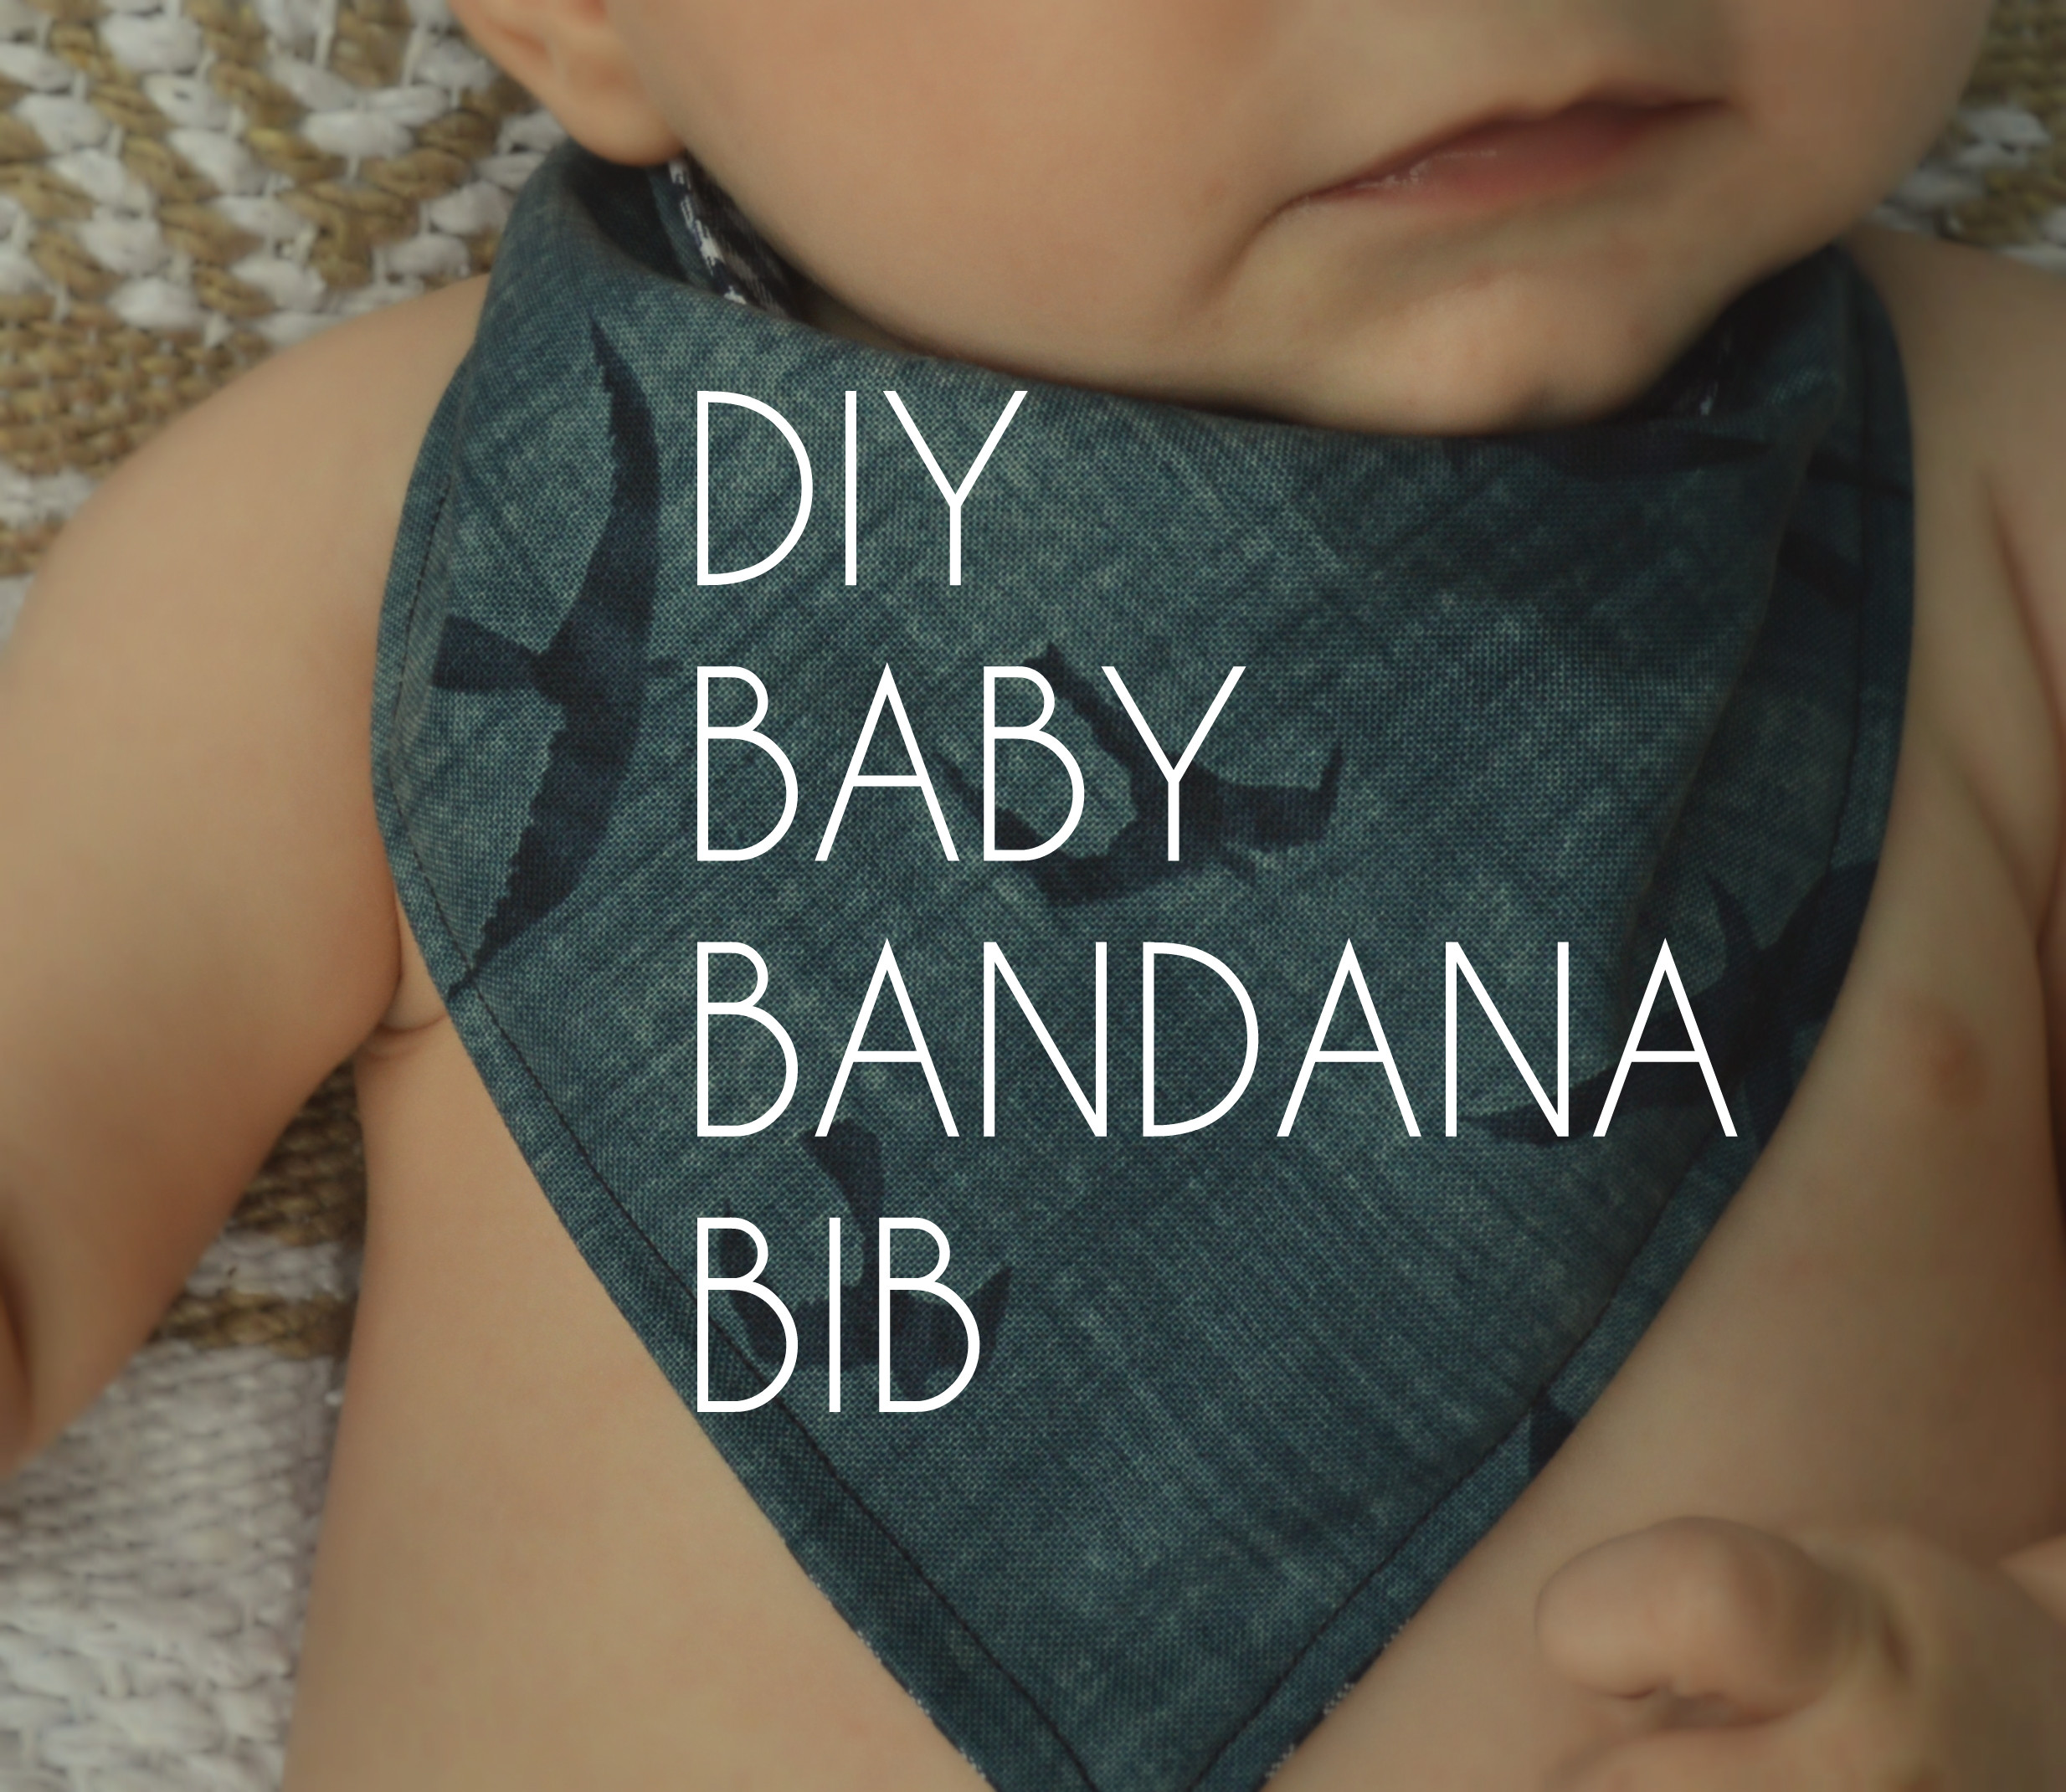 Best ideas about DIY Baby Bib
. Save or Pin DIY Baby Bandana Bibs Now.